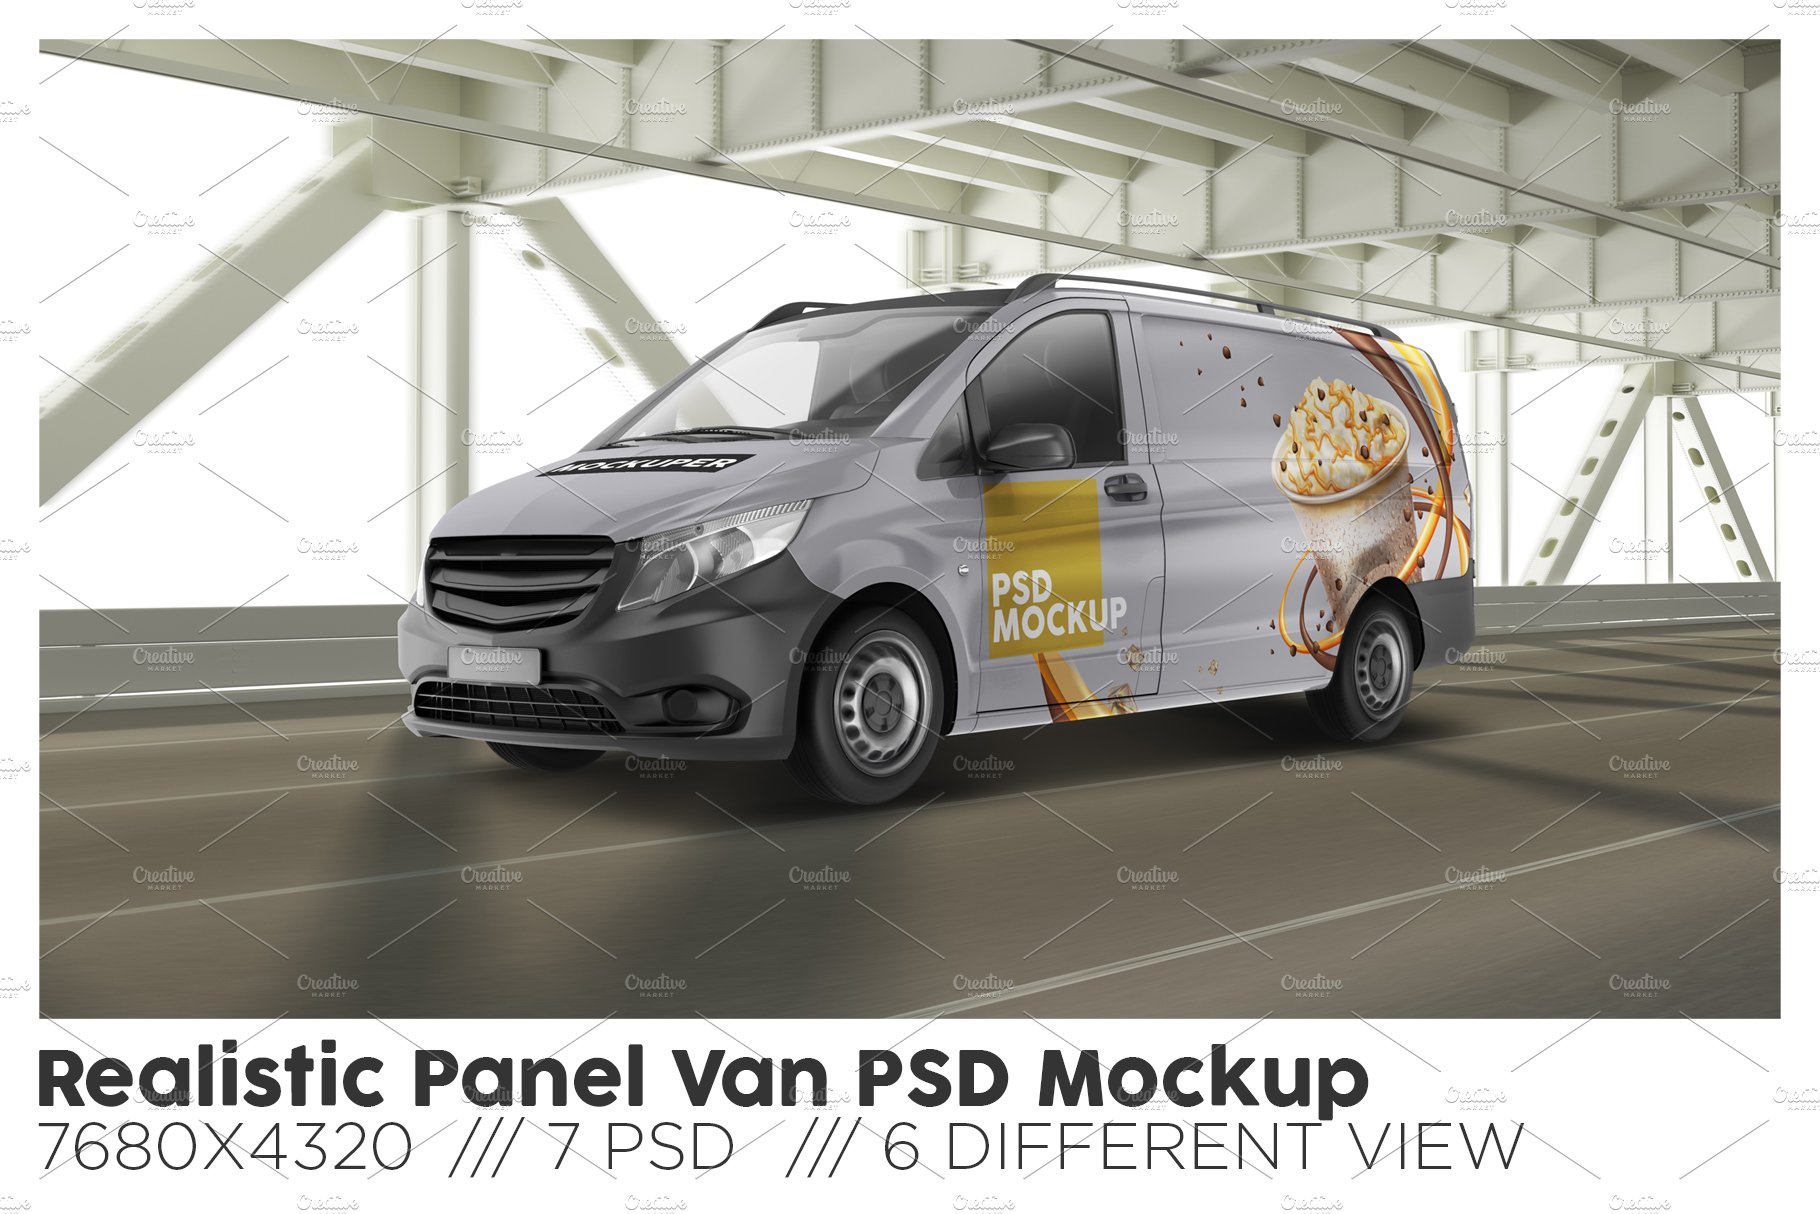 Realistic Panel Van PSD Mockup cover image.